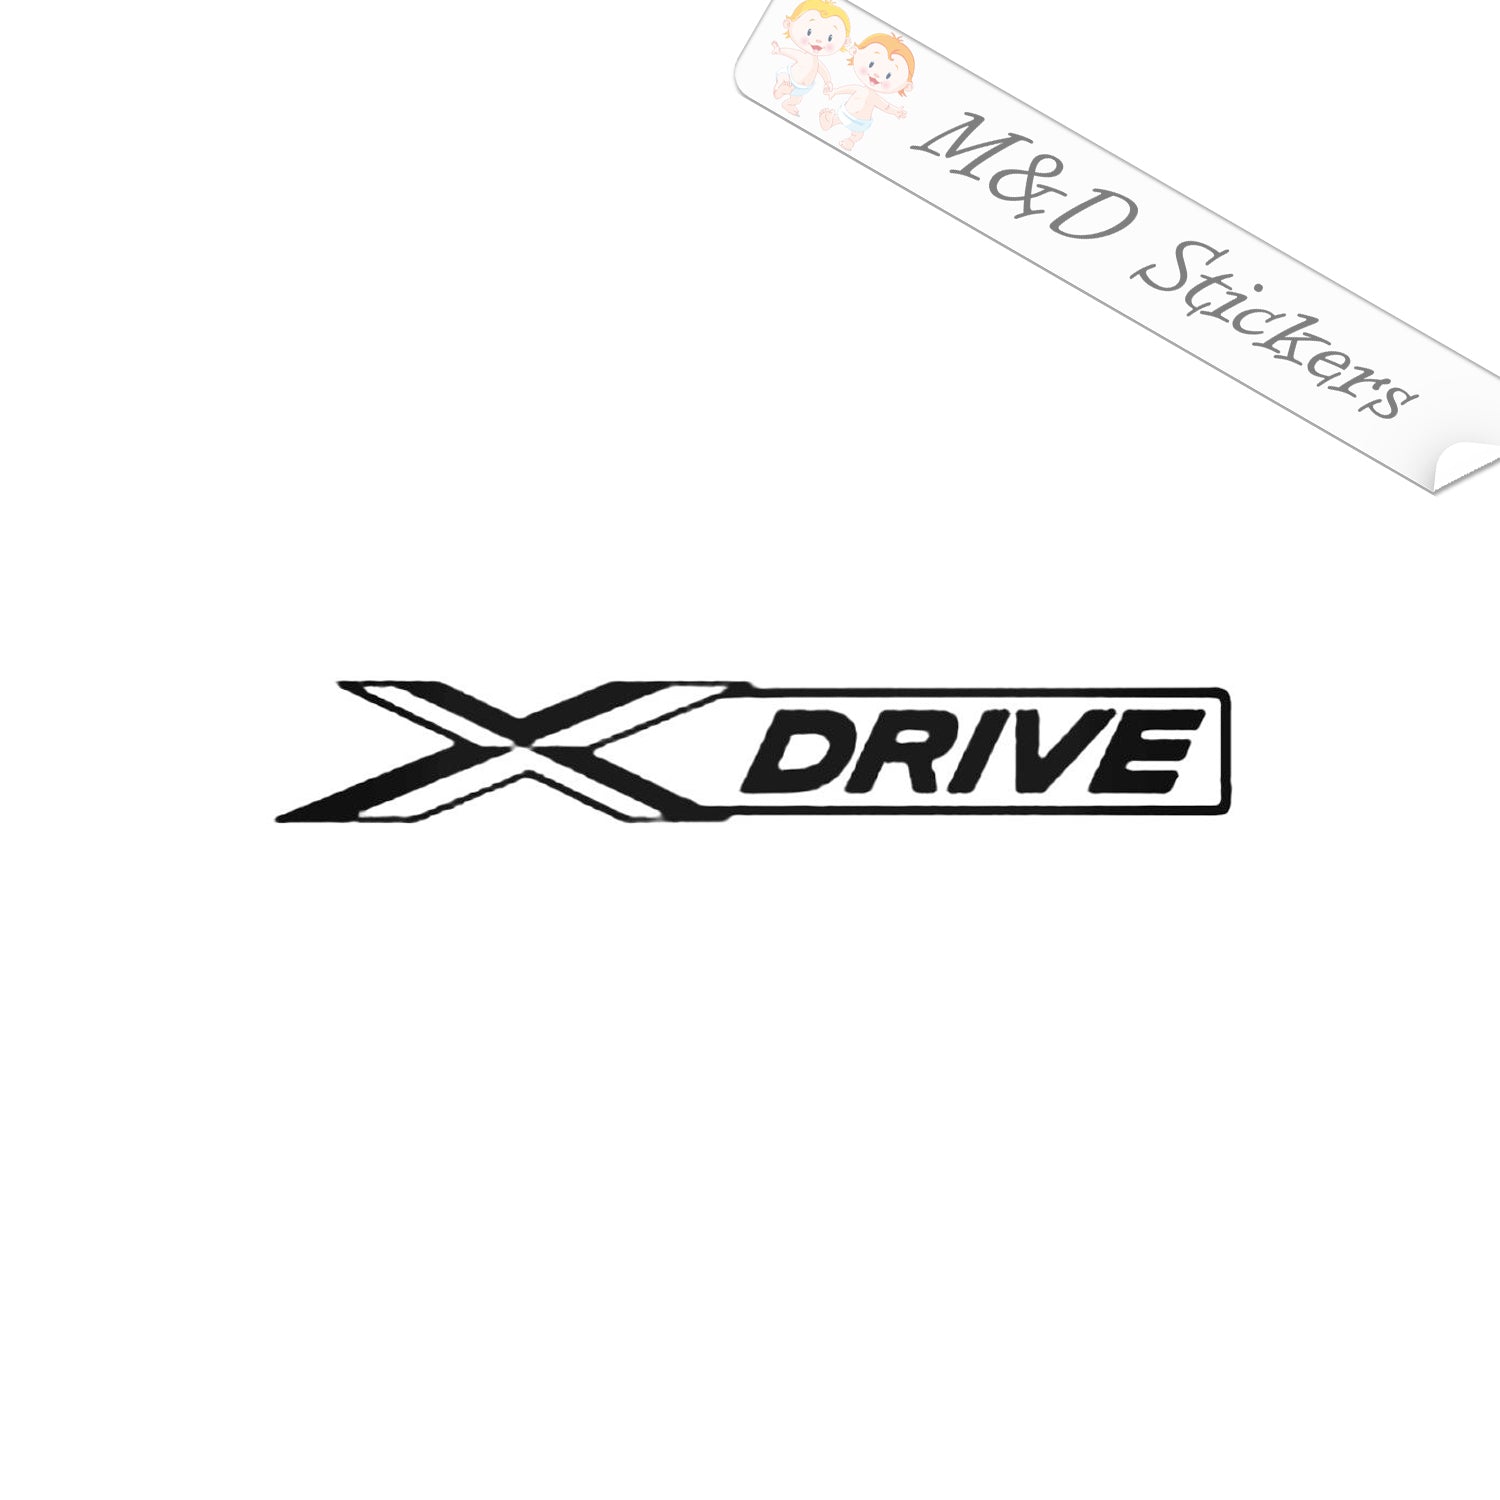 2x XDrive BMW Vinyl Decal Sticker Different colors & size for Cars/Bik –  M&D Stickers